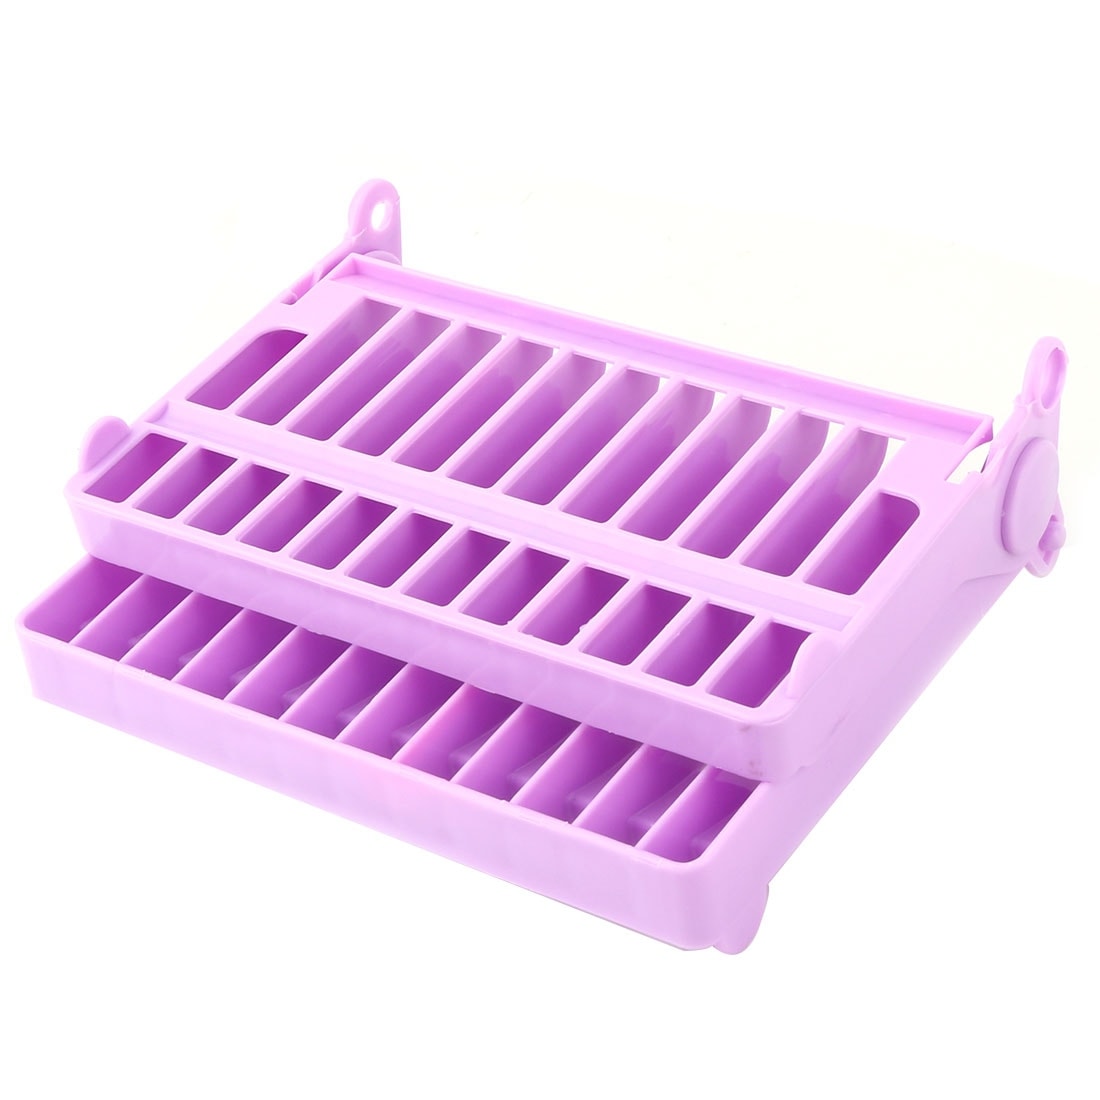 Plastic 12 Slots Folding Dish Drying Drainer Plate Rack Organizer - Purple  - 8 x 6 x 7.5(L*W*H) - Bed Bath & Beyond - 23097613